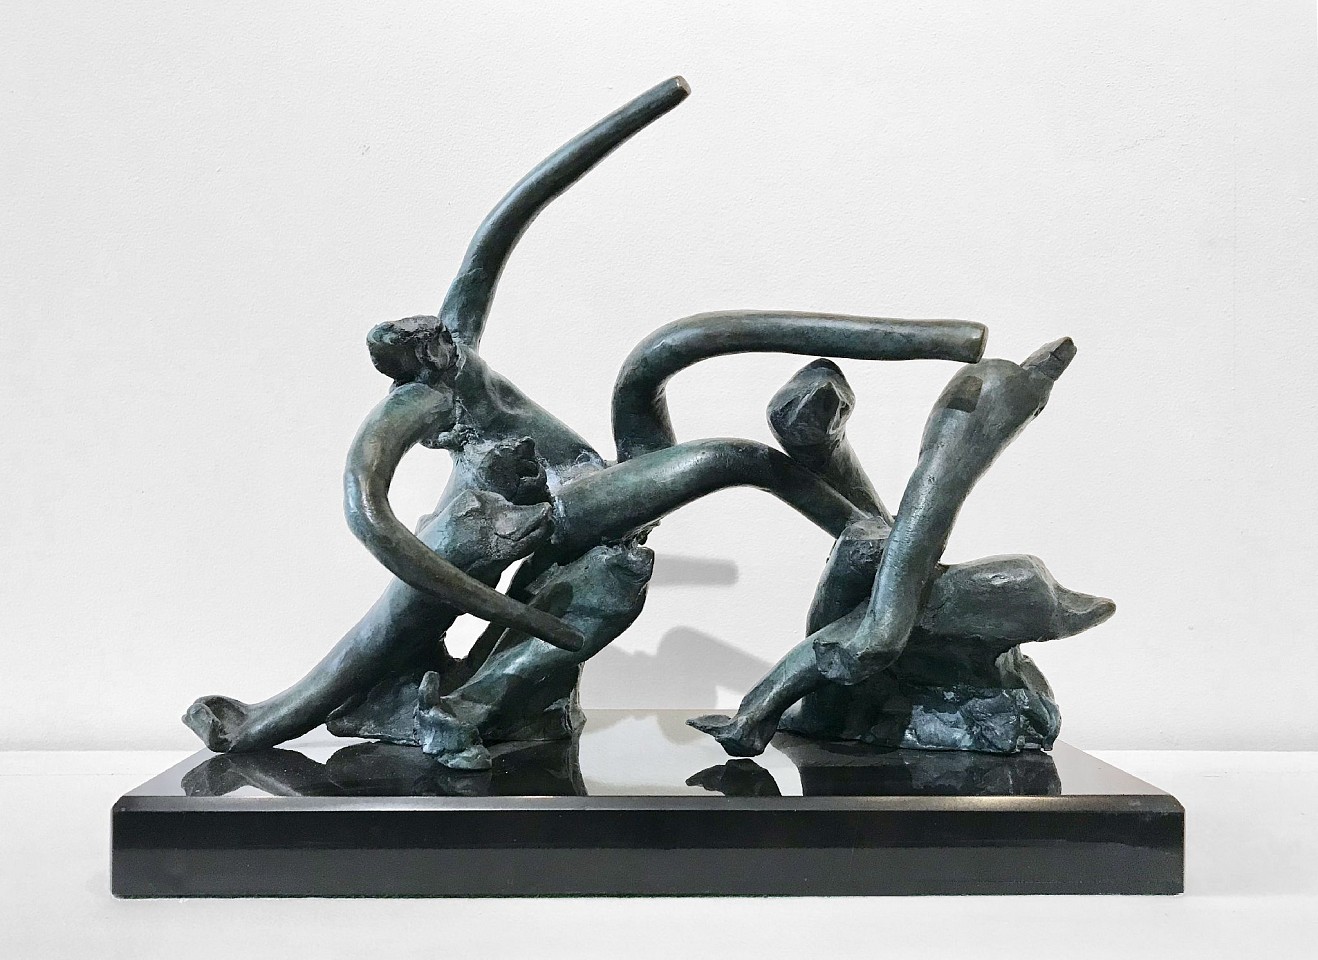 Reuben Nakian, Nymph with Dolphins, Ed. 7/9
bronze, 10 x 14 1/4 x 6 1/2 in. (25.4 x 36.2 x 16.5 cm)
RN140303